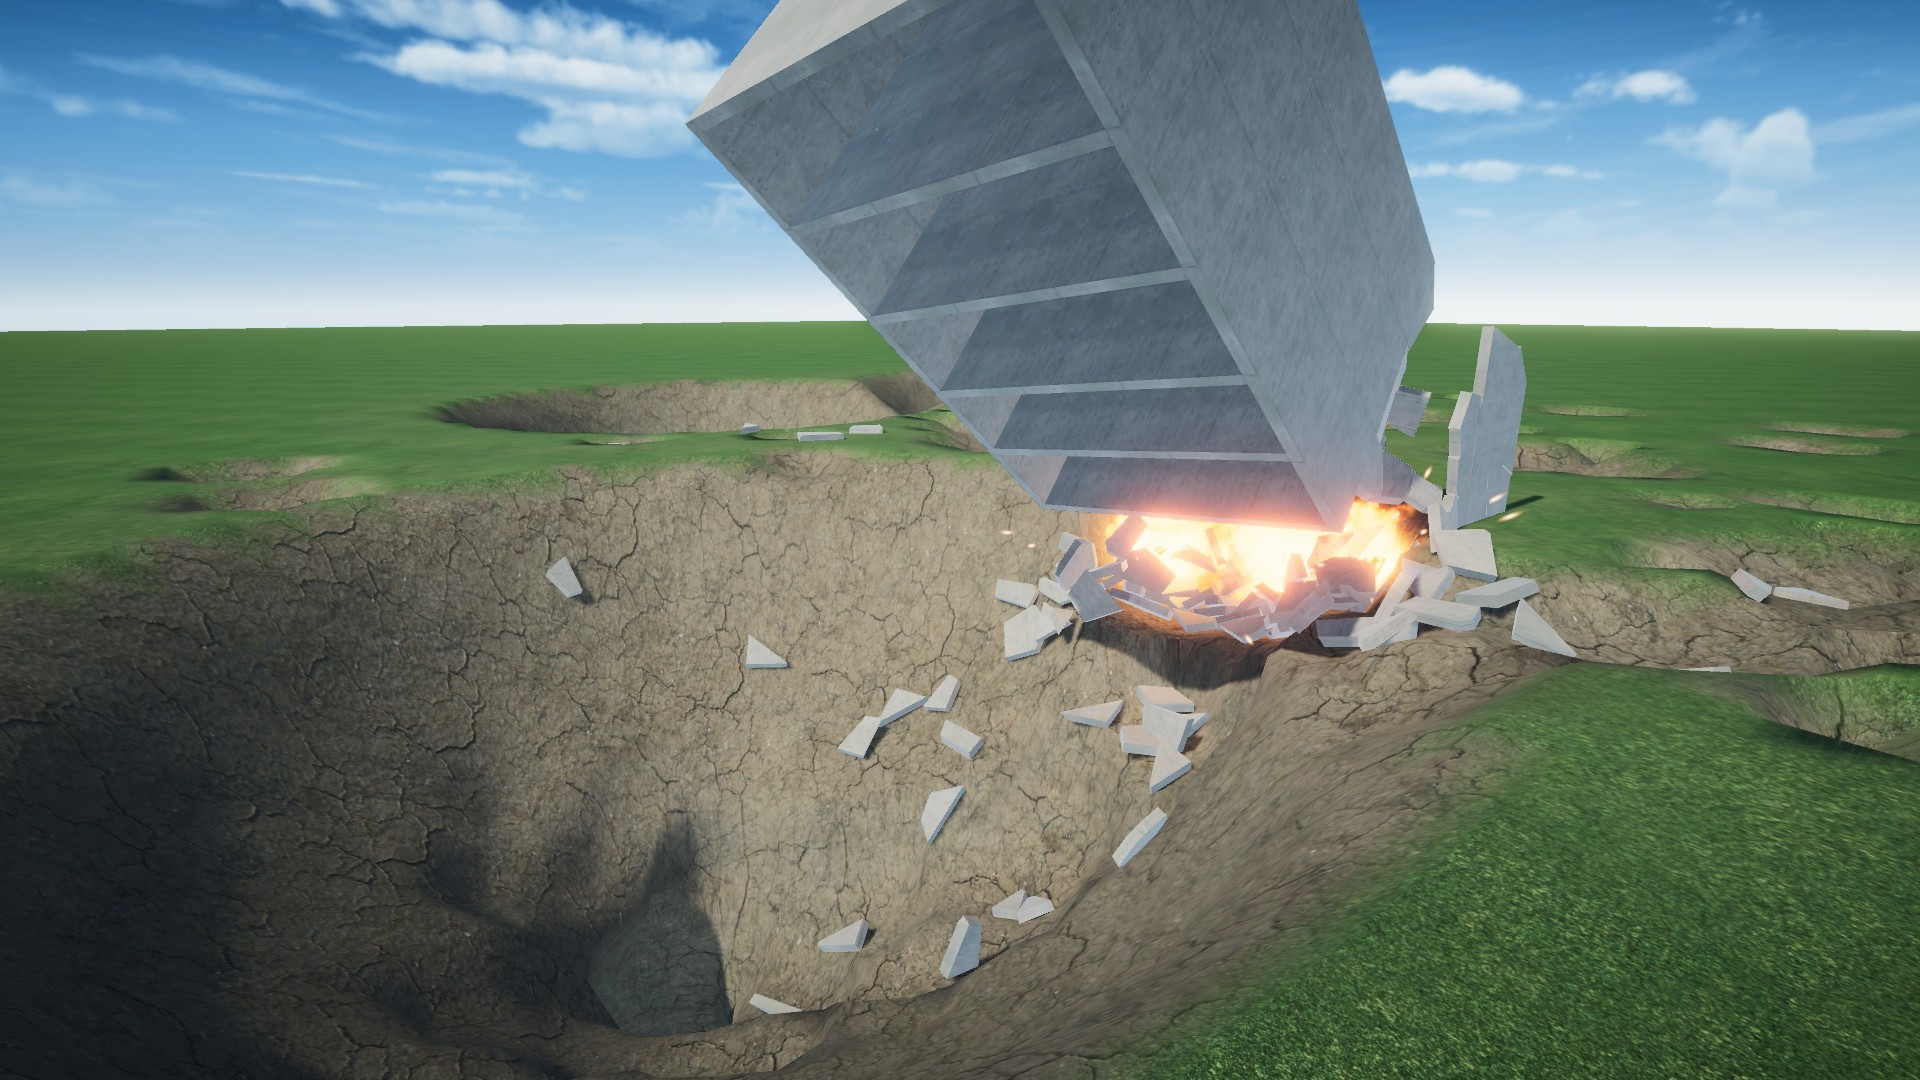 Destructive Physics - Destruction Simulator Free Download